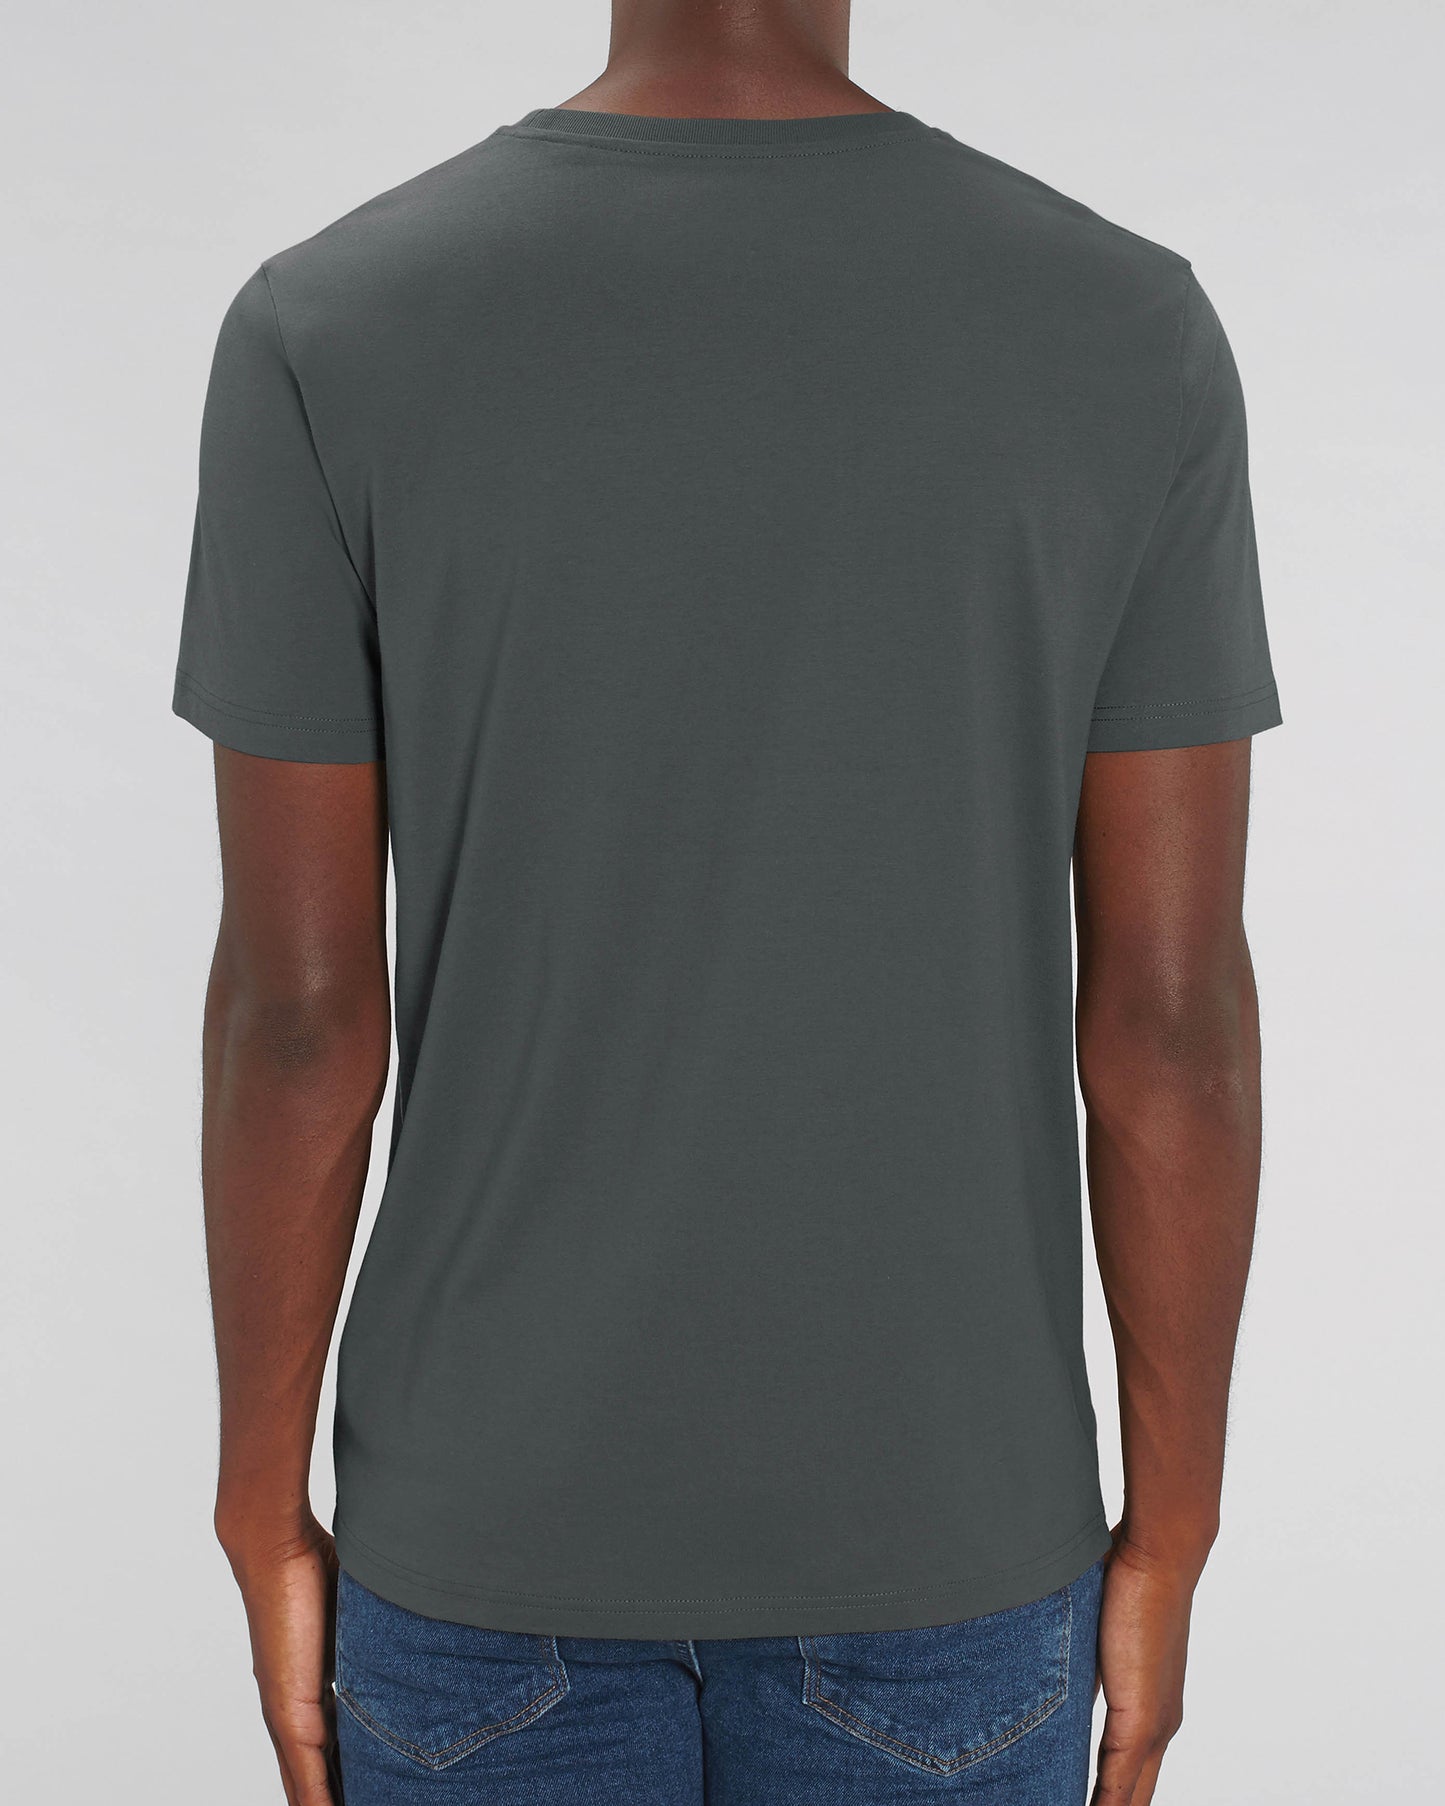 Hang Ten Surfer T-shirt - Anthracite Grey